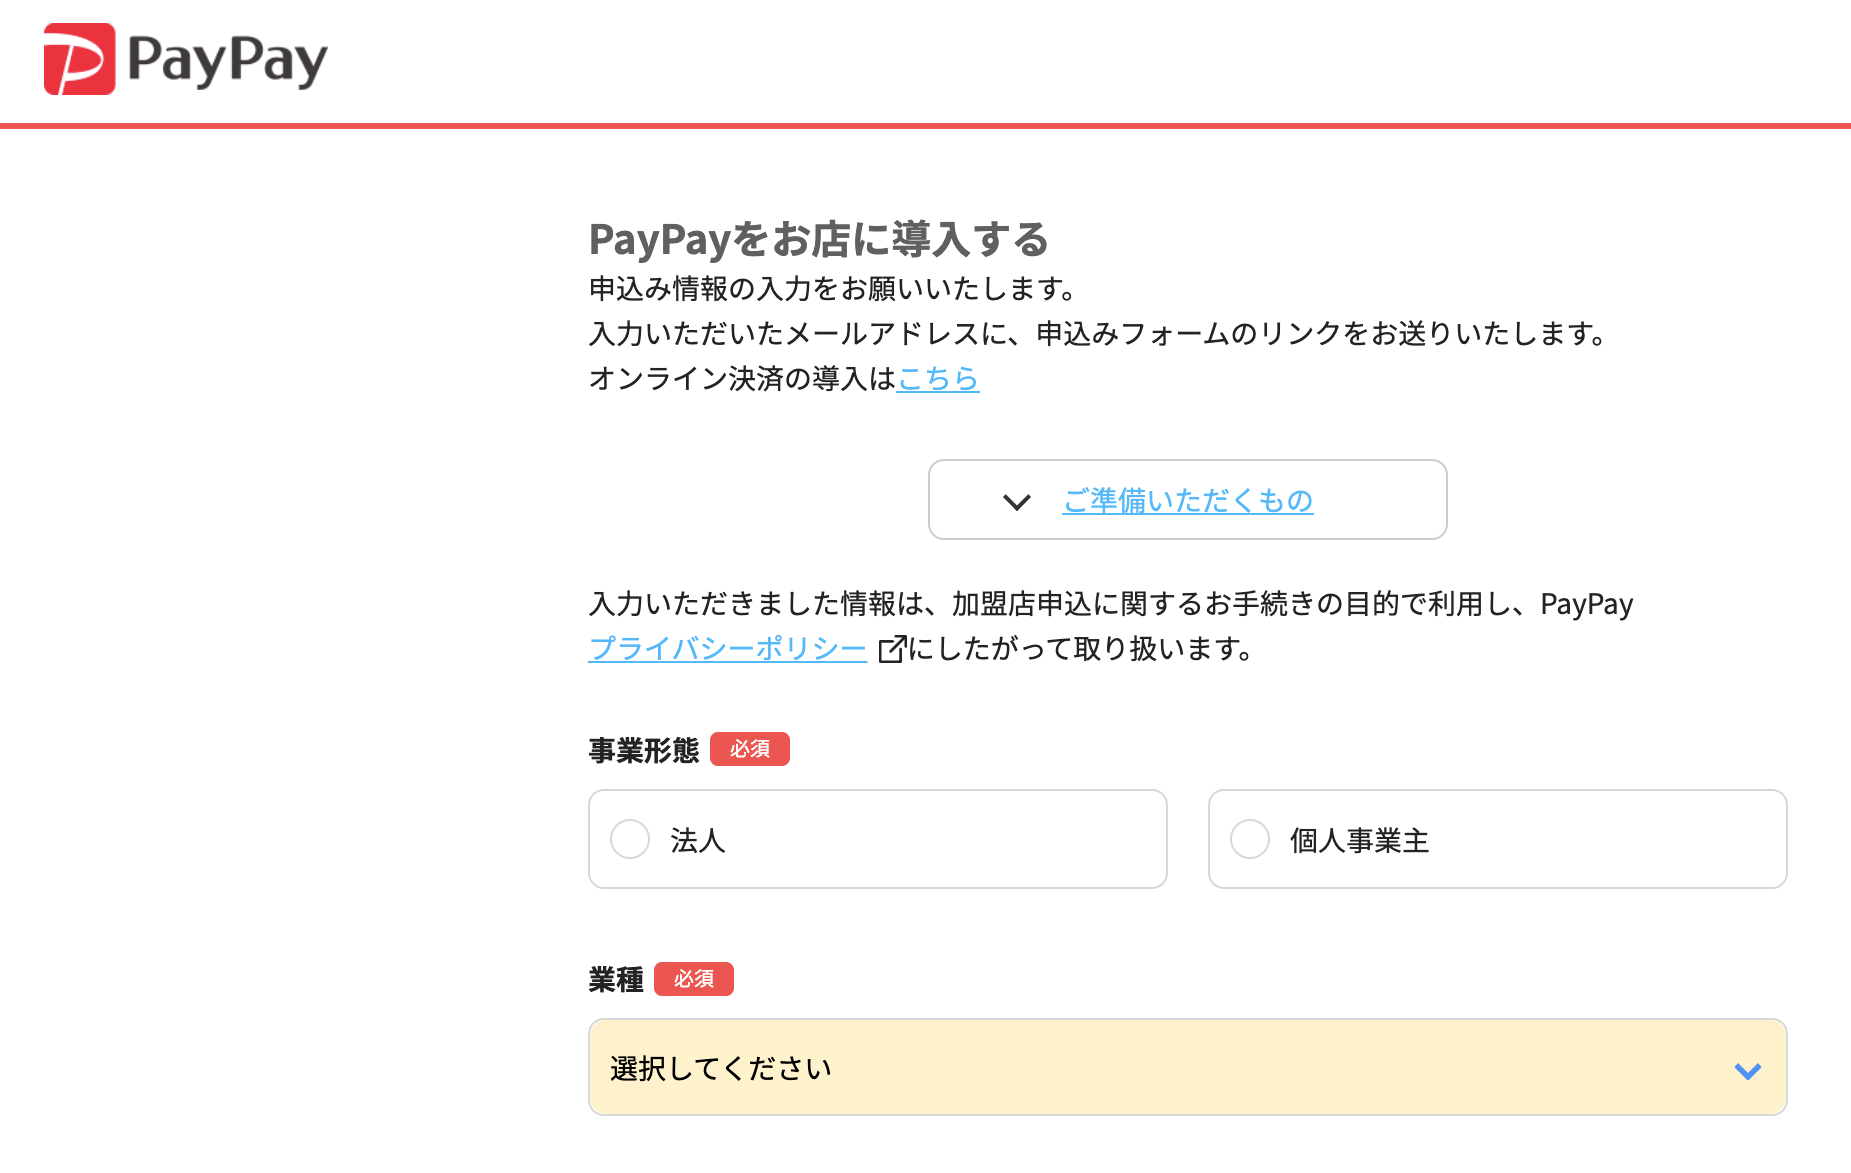 PayPay公式ページの仮登録画面